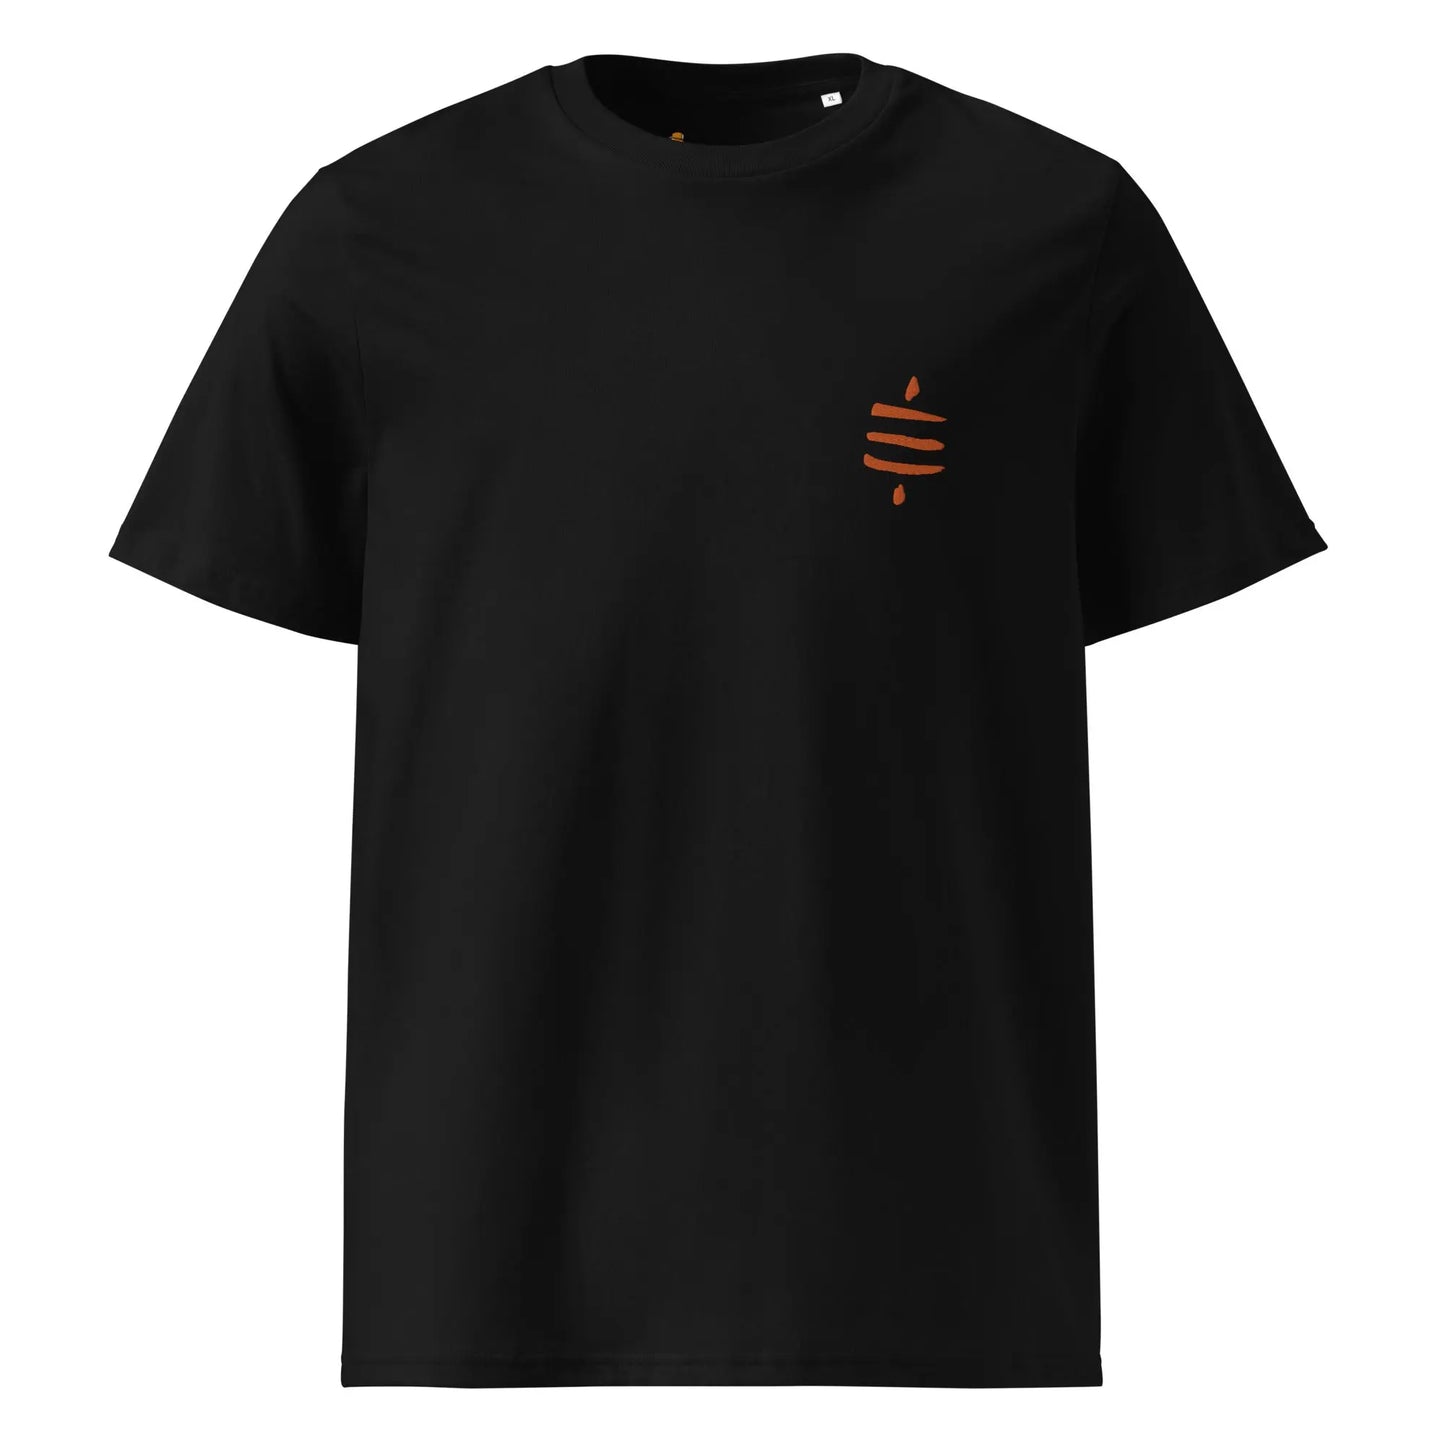 SATS Symbol - Bitcoin T-shirt - Orange Embroidered - Premium - Unisex - Organic Cotton Store of Value